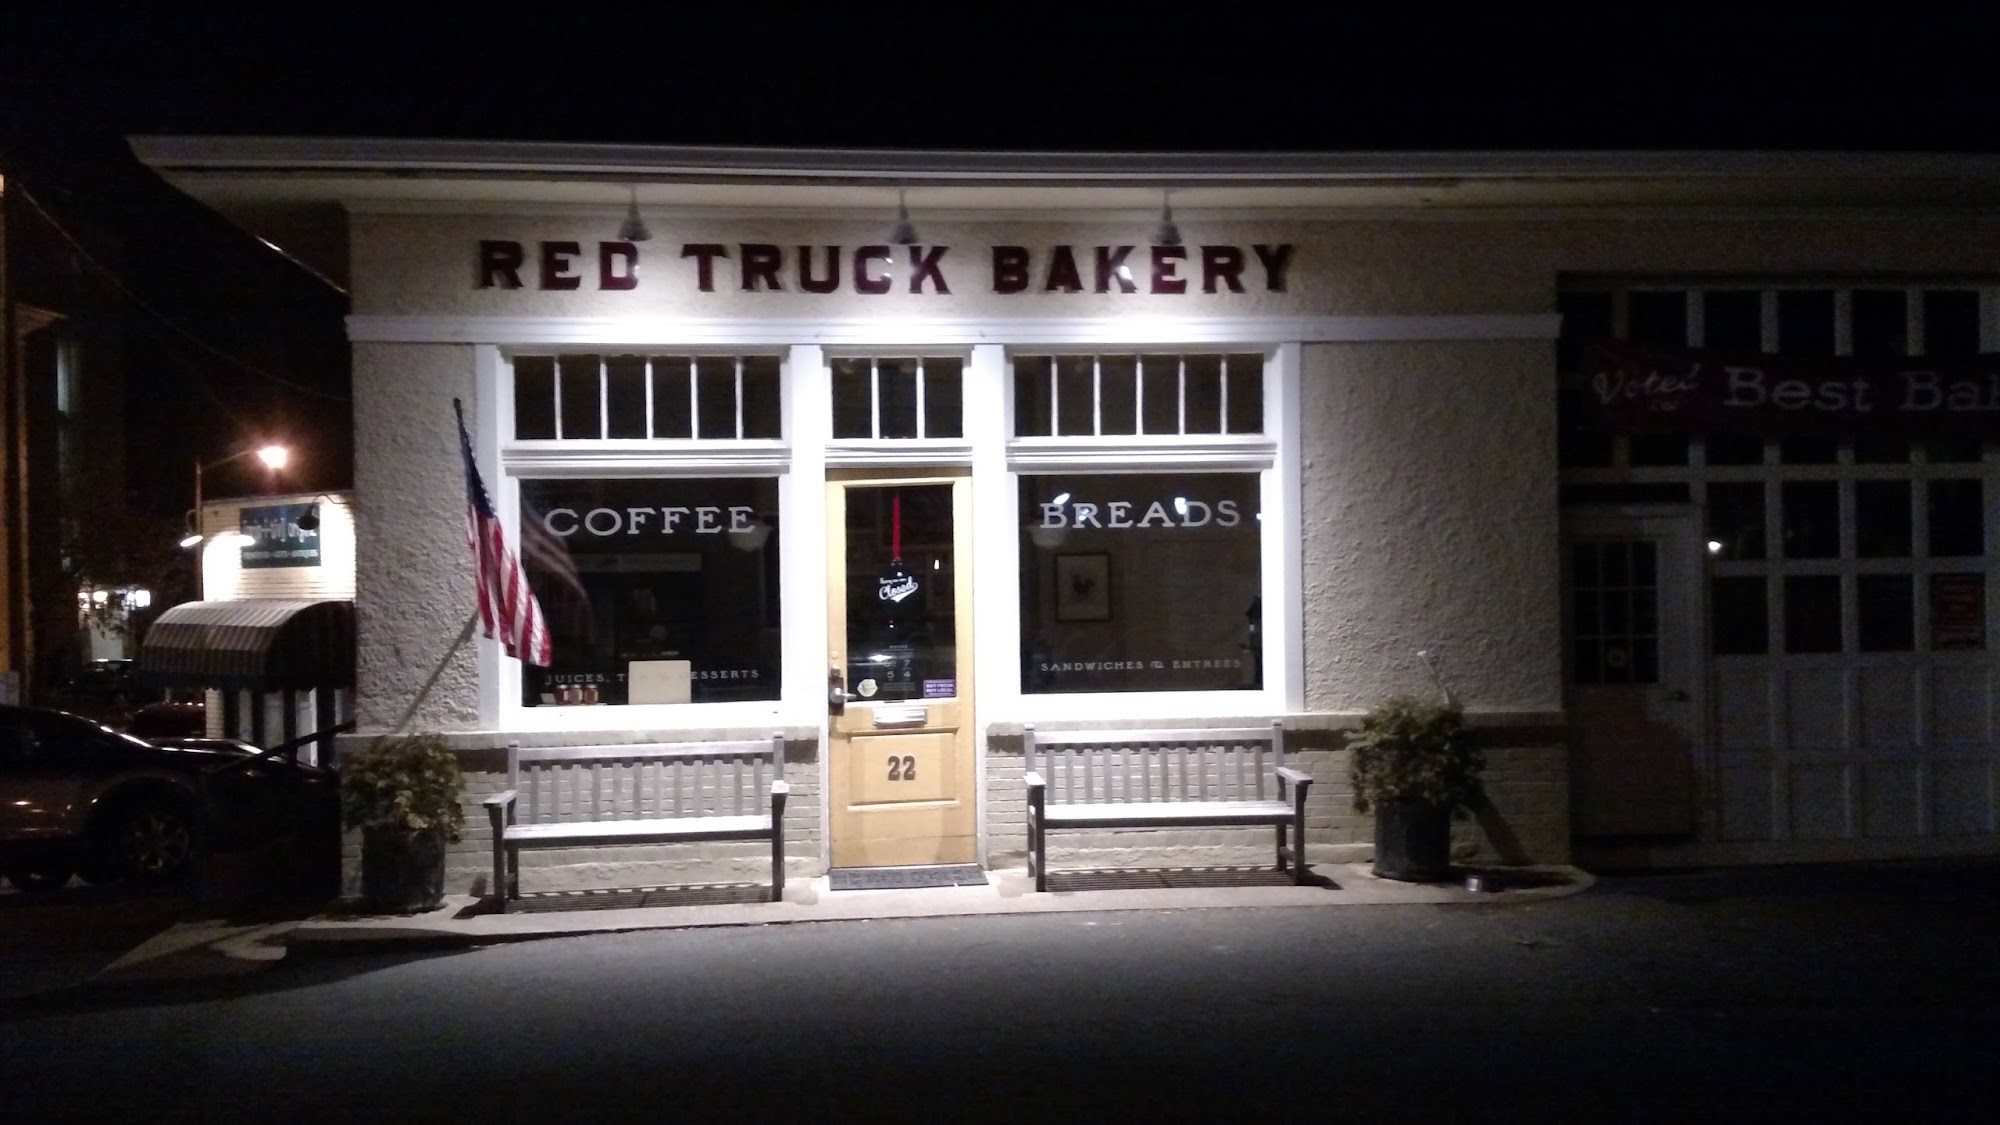 Red Truck Rural Bakery